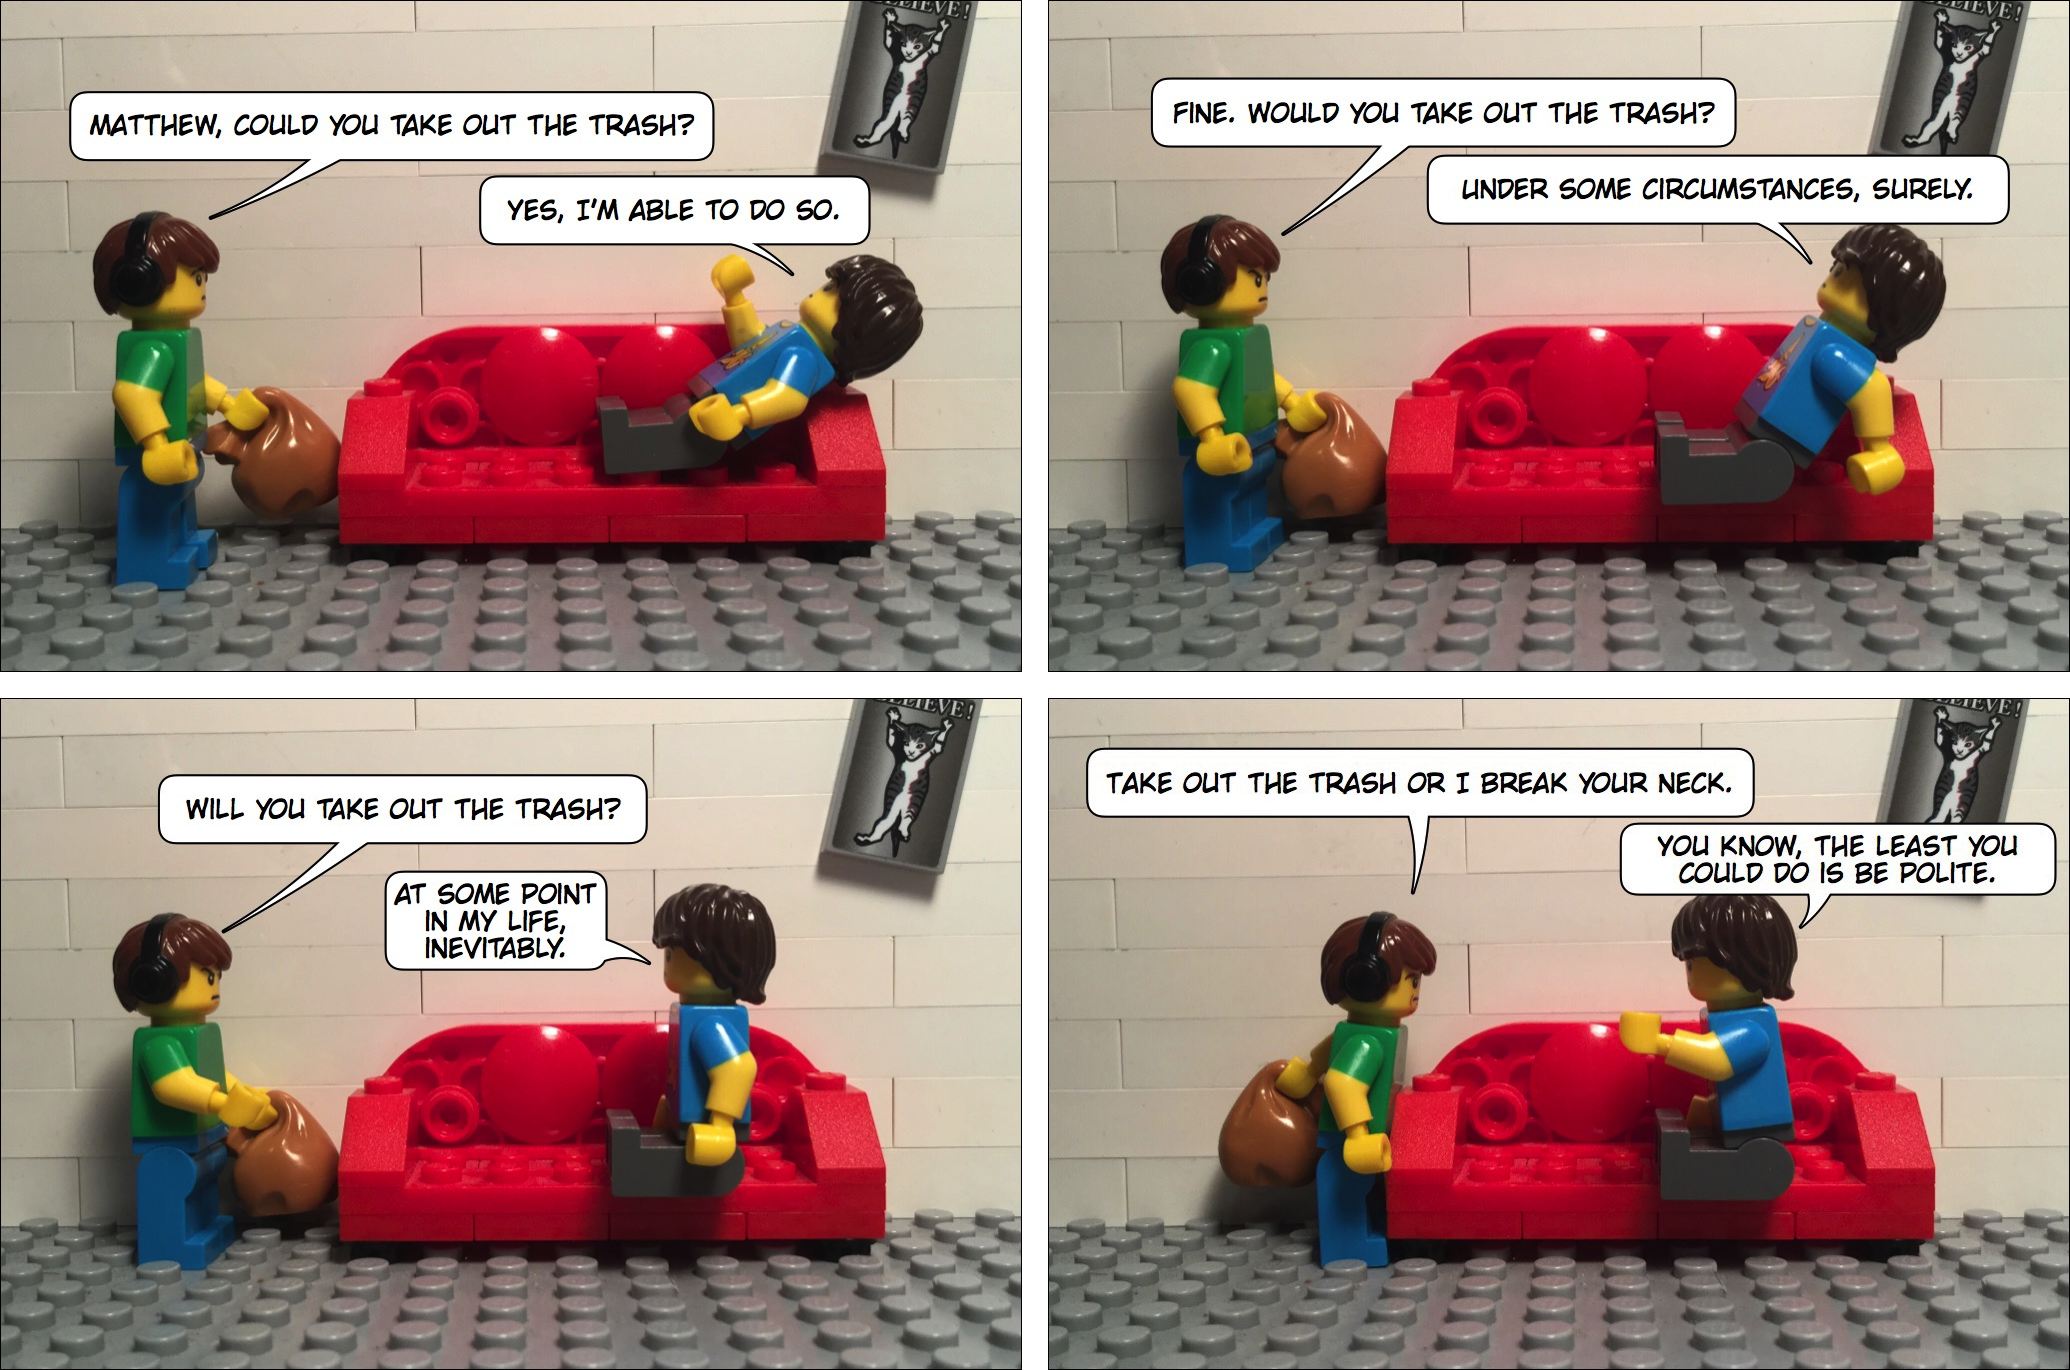 Lego Comic #528 - Trash